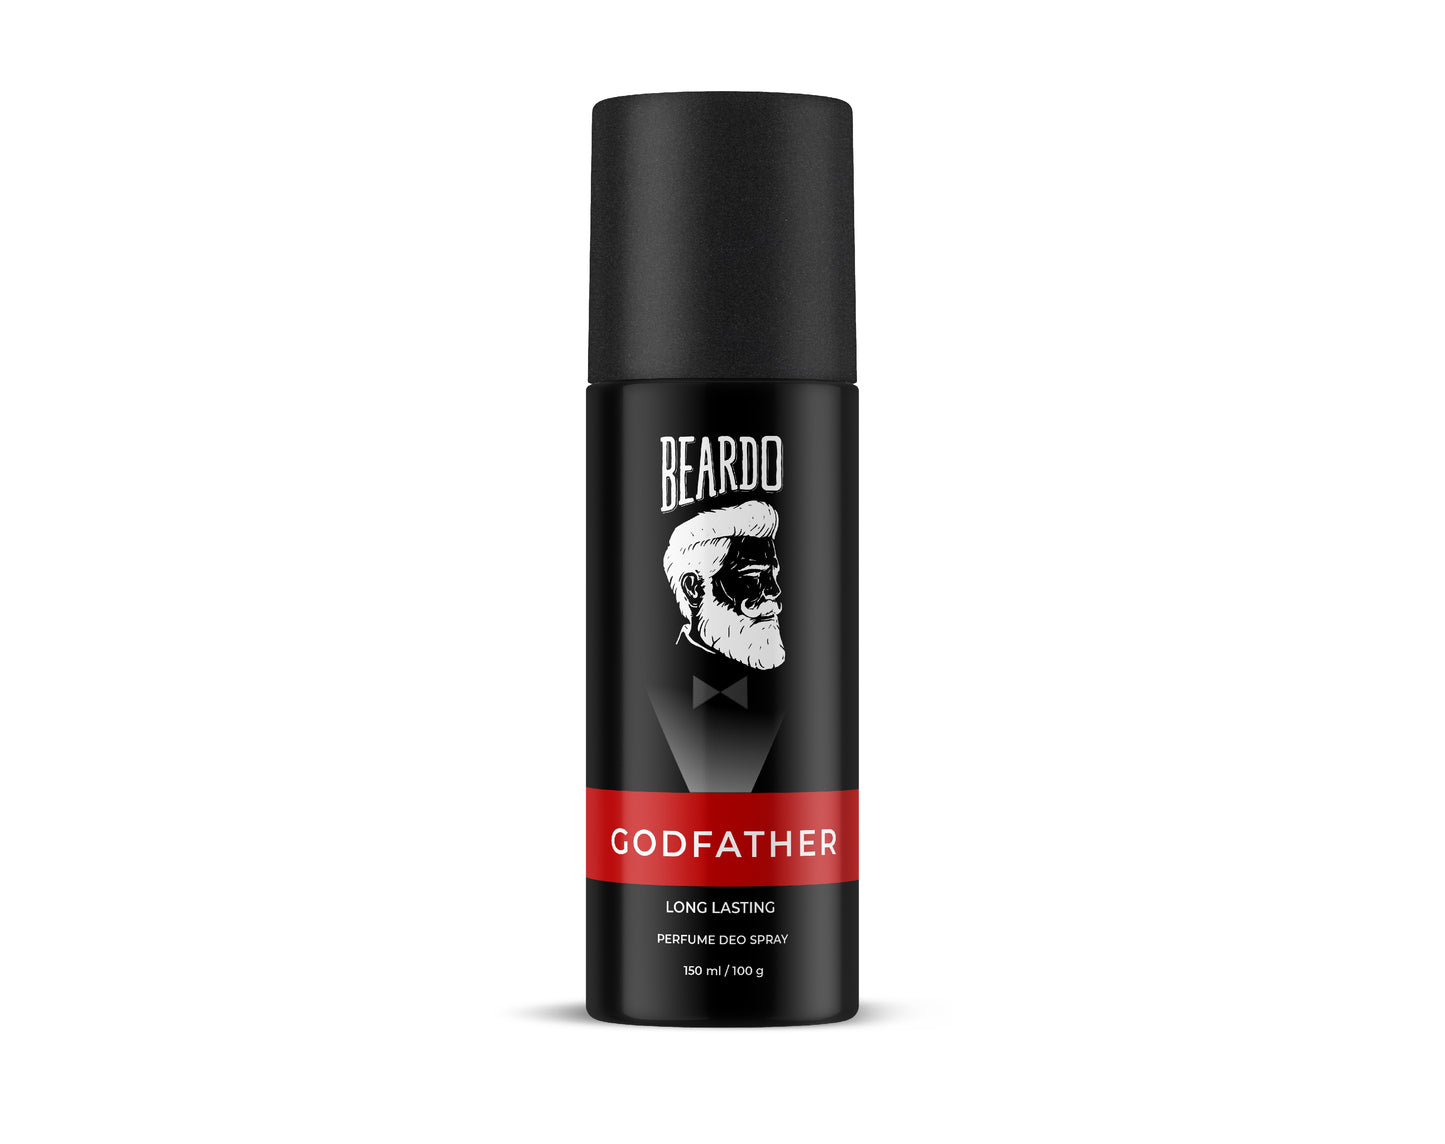 beardo godfather body spray, long lasting perfume